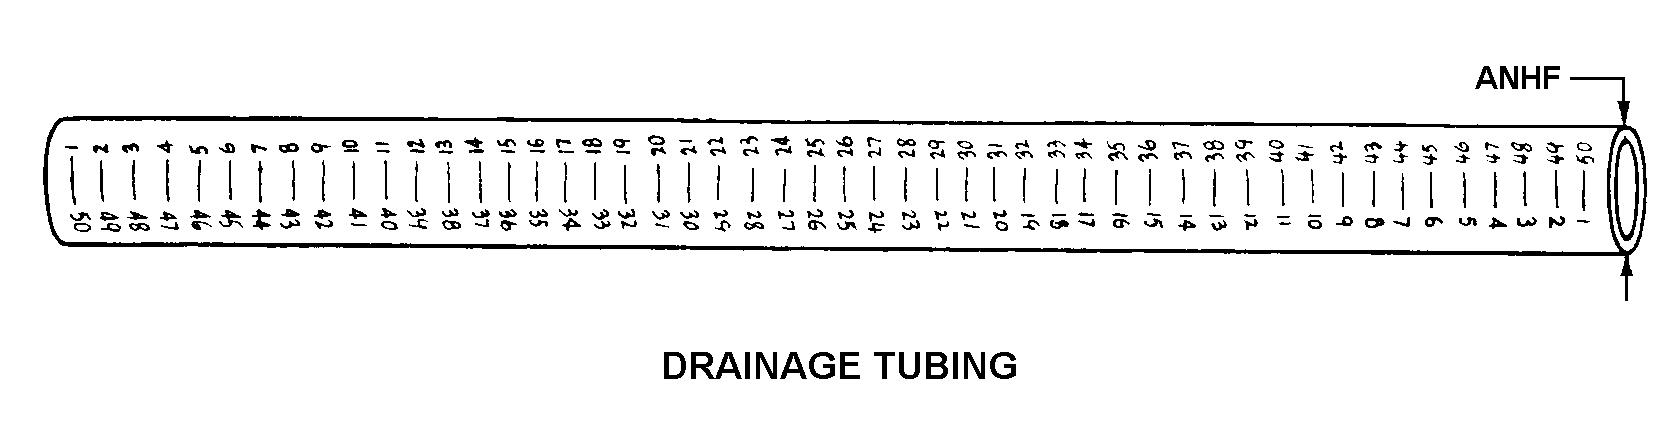 DRAINAGE TUBING style nsn 6515-01-224-0129